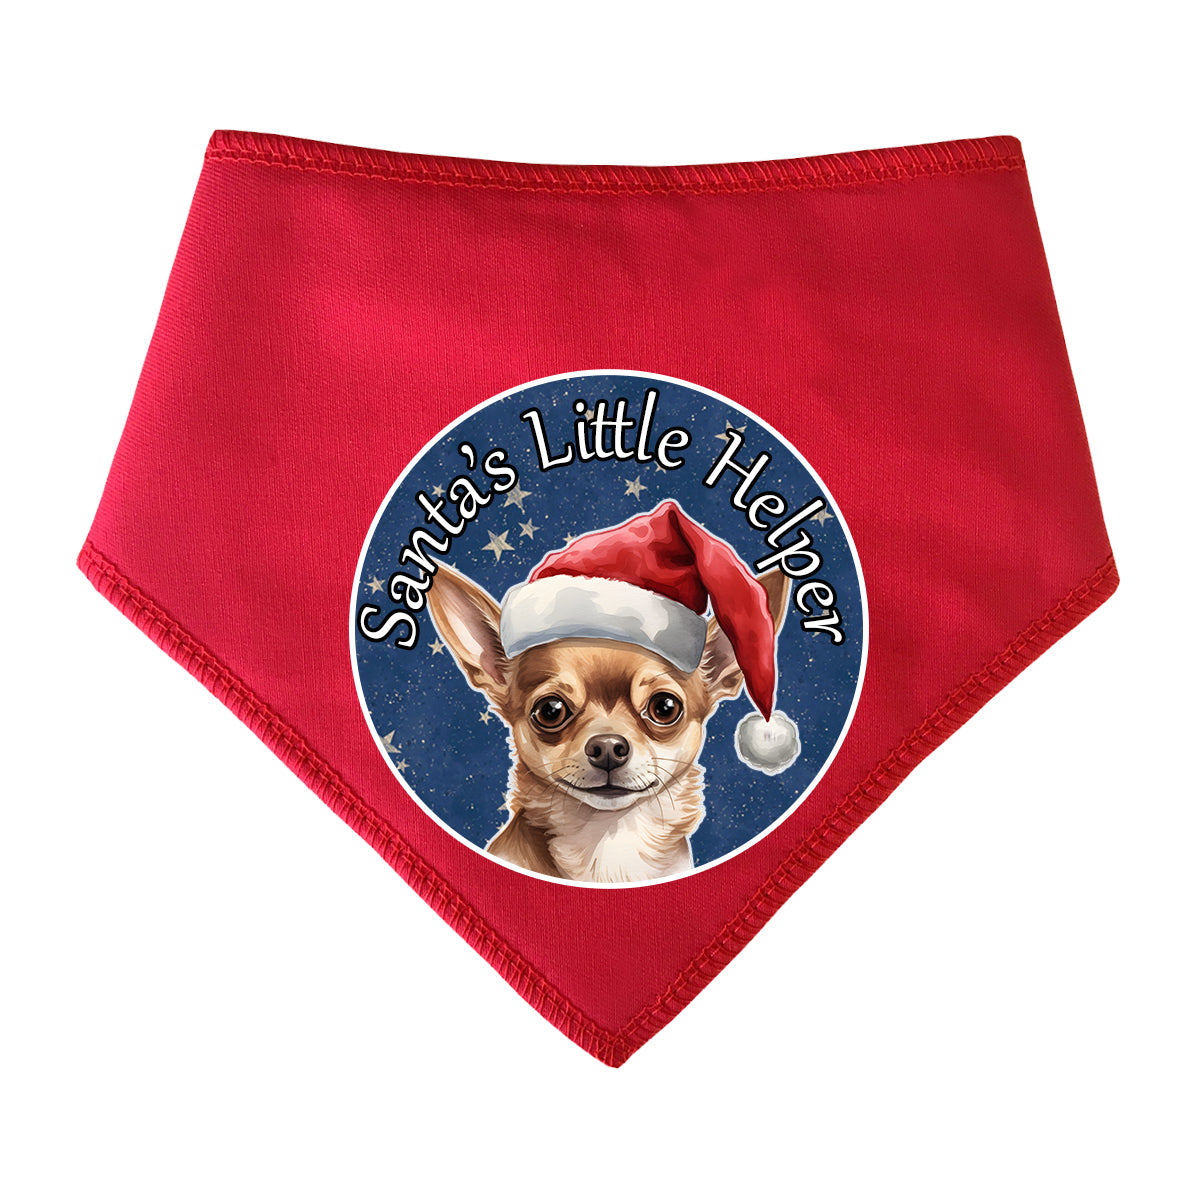 Chihuahua Shorthair Dog Design Santa's Little Helper Dog Bandana